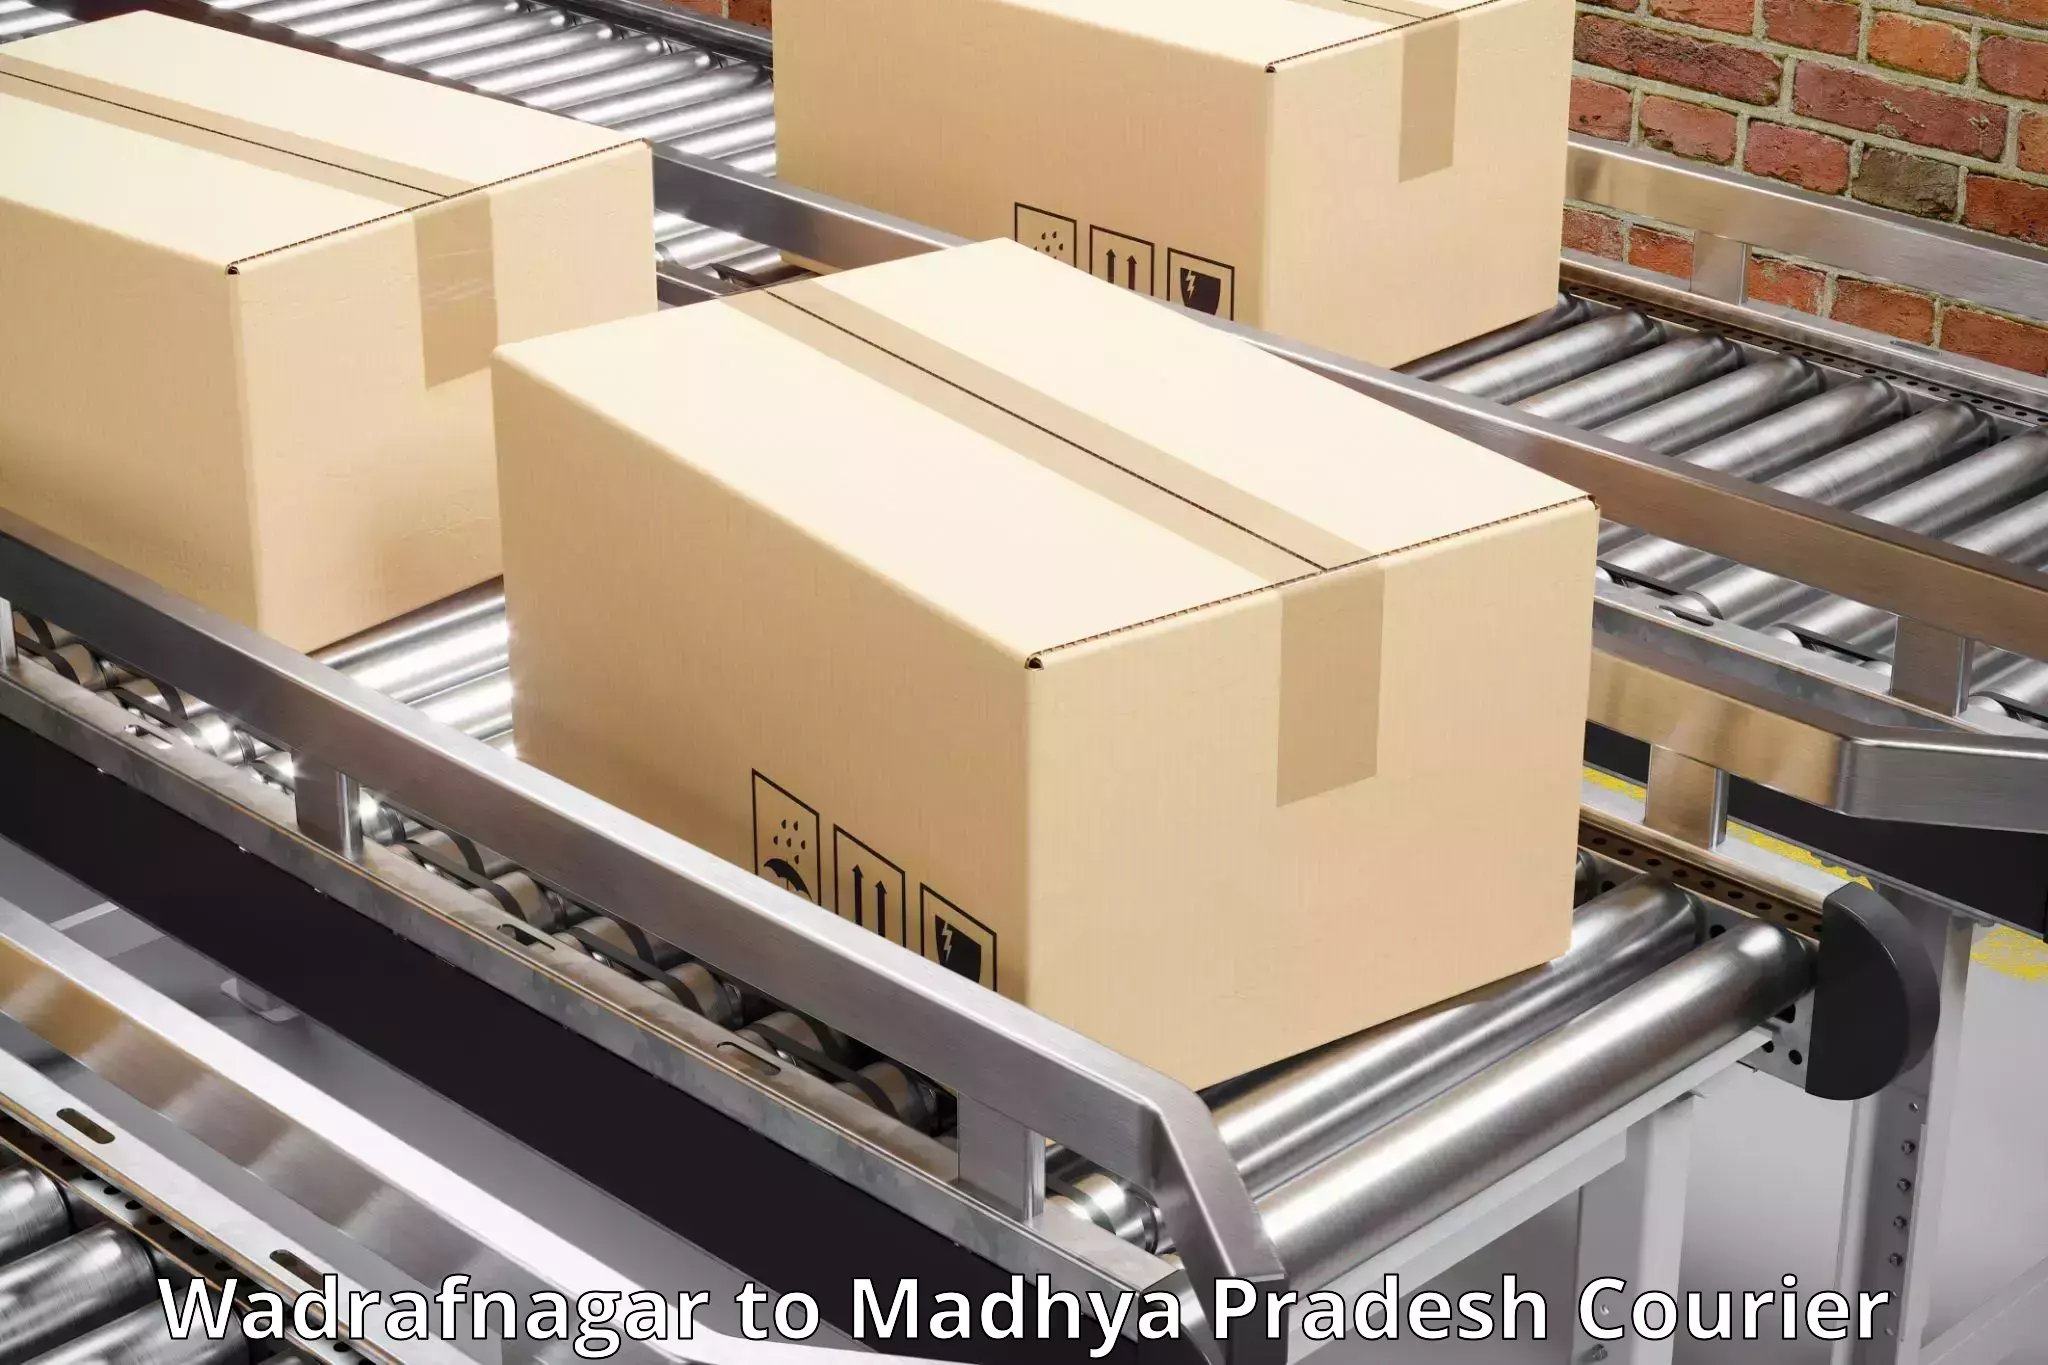 Customized shipping options Wadrafnagar to Tendukheda